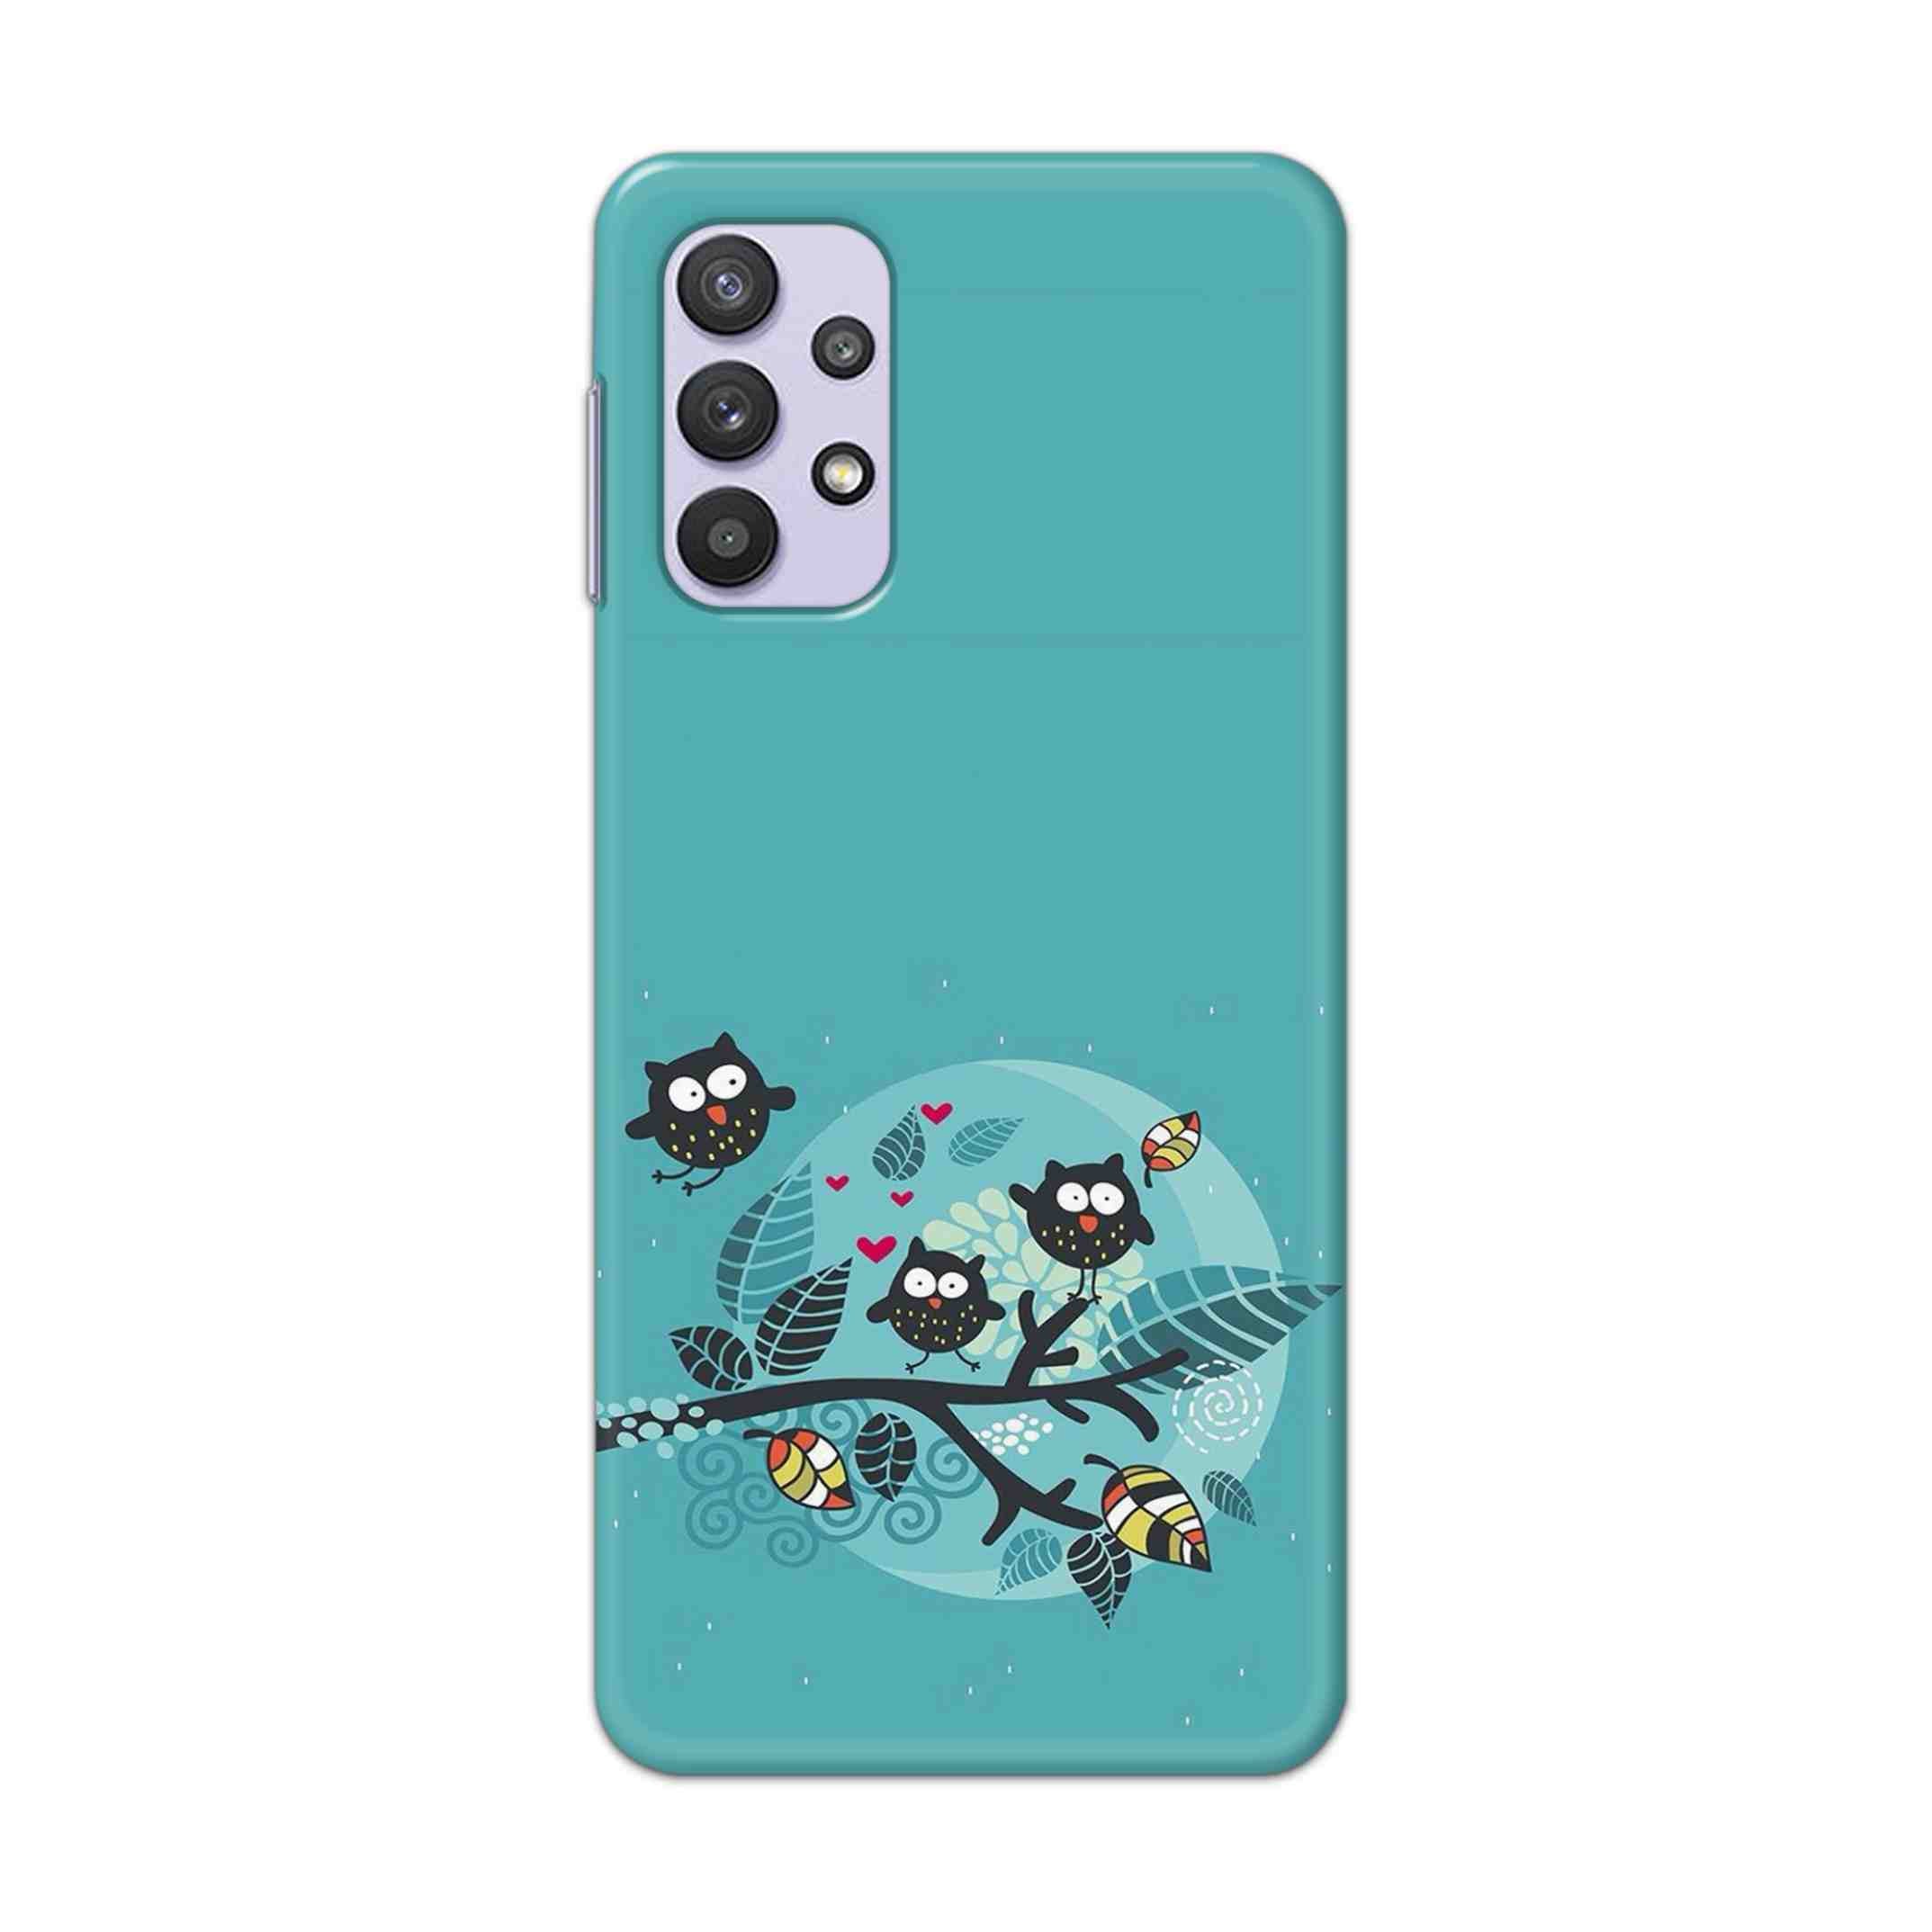 Buy Owl Hard Back Mobile Phone Case Cover For Samsung A32 5G Online